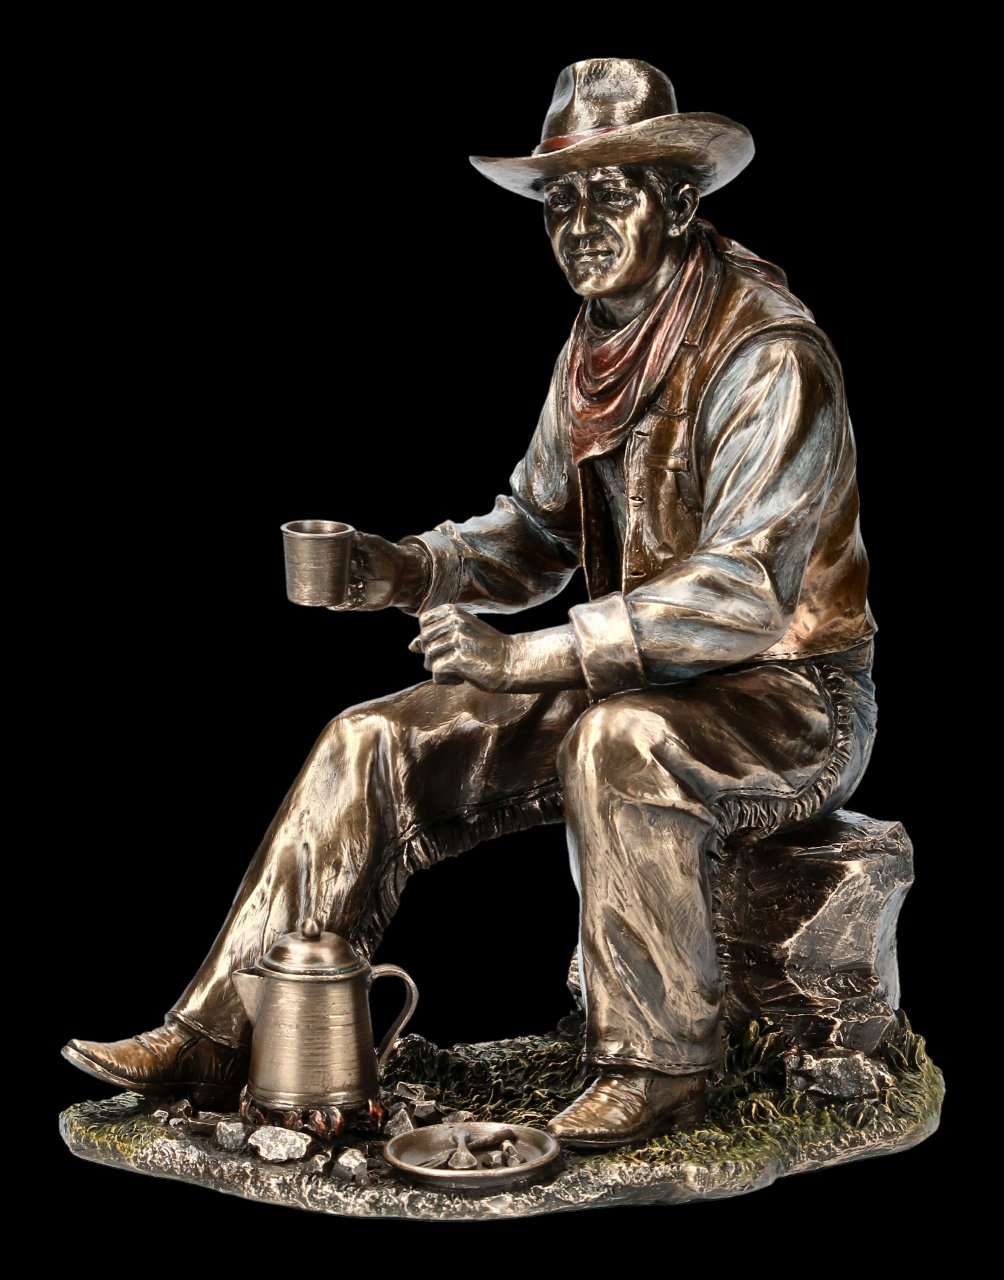 Cowboy Figurine - Coffee Break on Bonfire